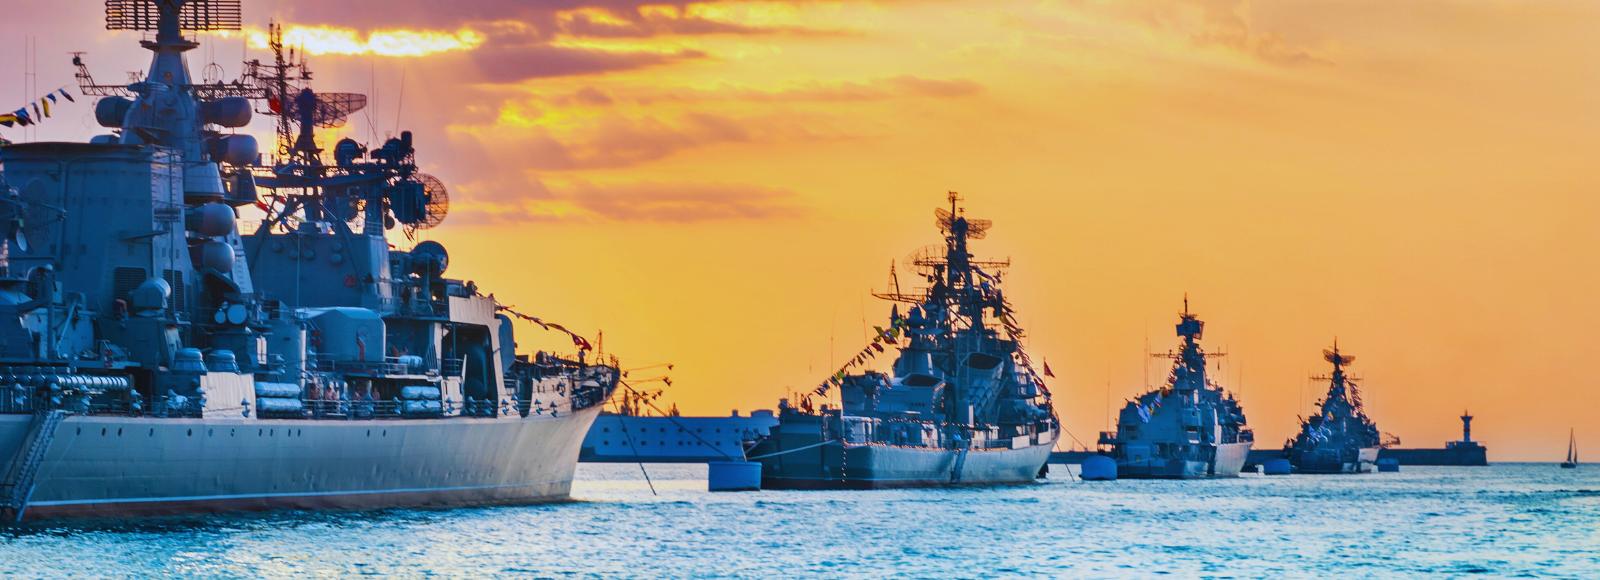 Warships in ocean, heading toward sunset